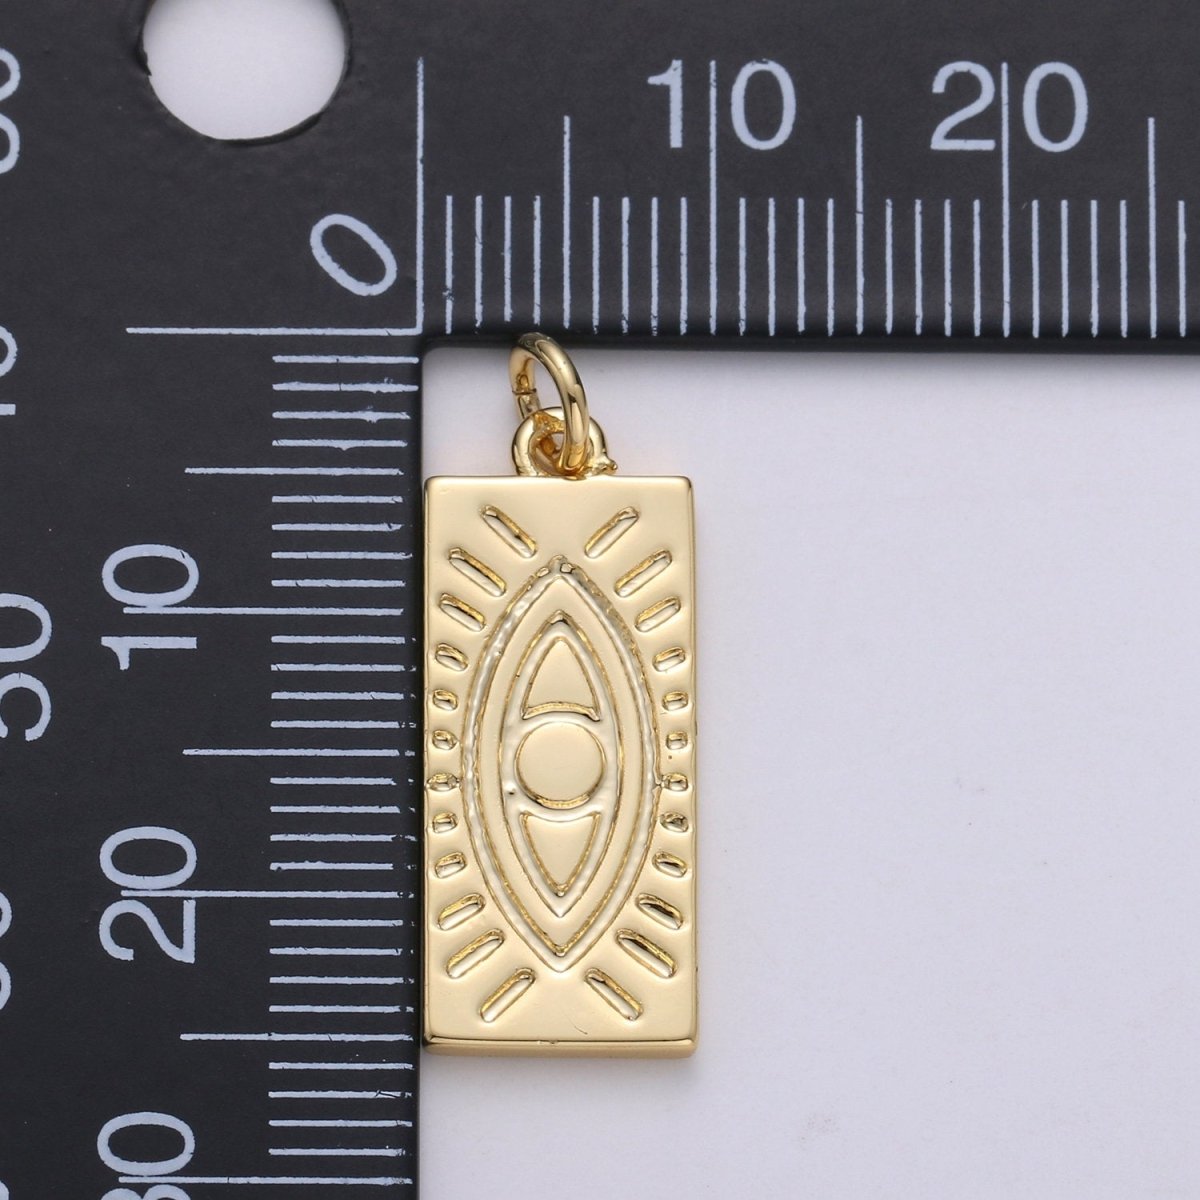 Evil Eye Pendant • 14k Gold Filled Tiny Evil Eye Pendant • Protection Pendant • Military Tag Charm • Minimalist Jewelry Pendant Making D-640 - DLUXCA